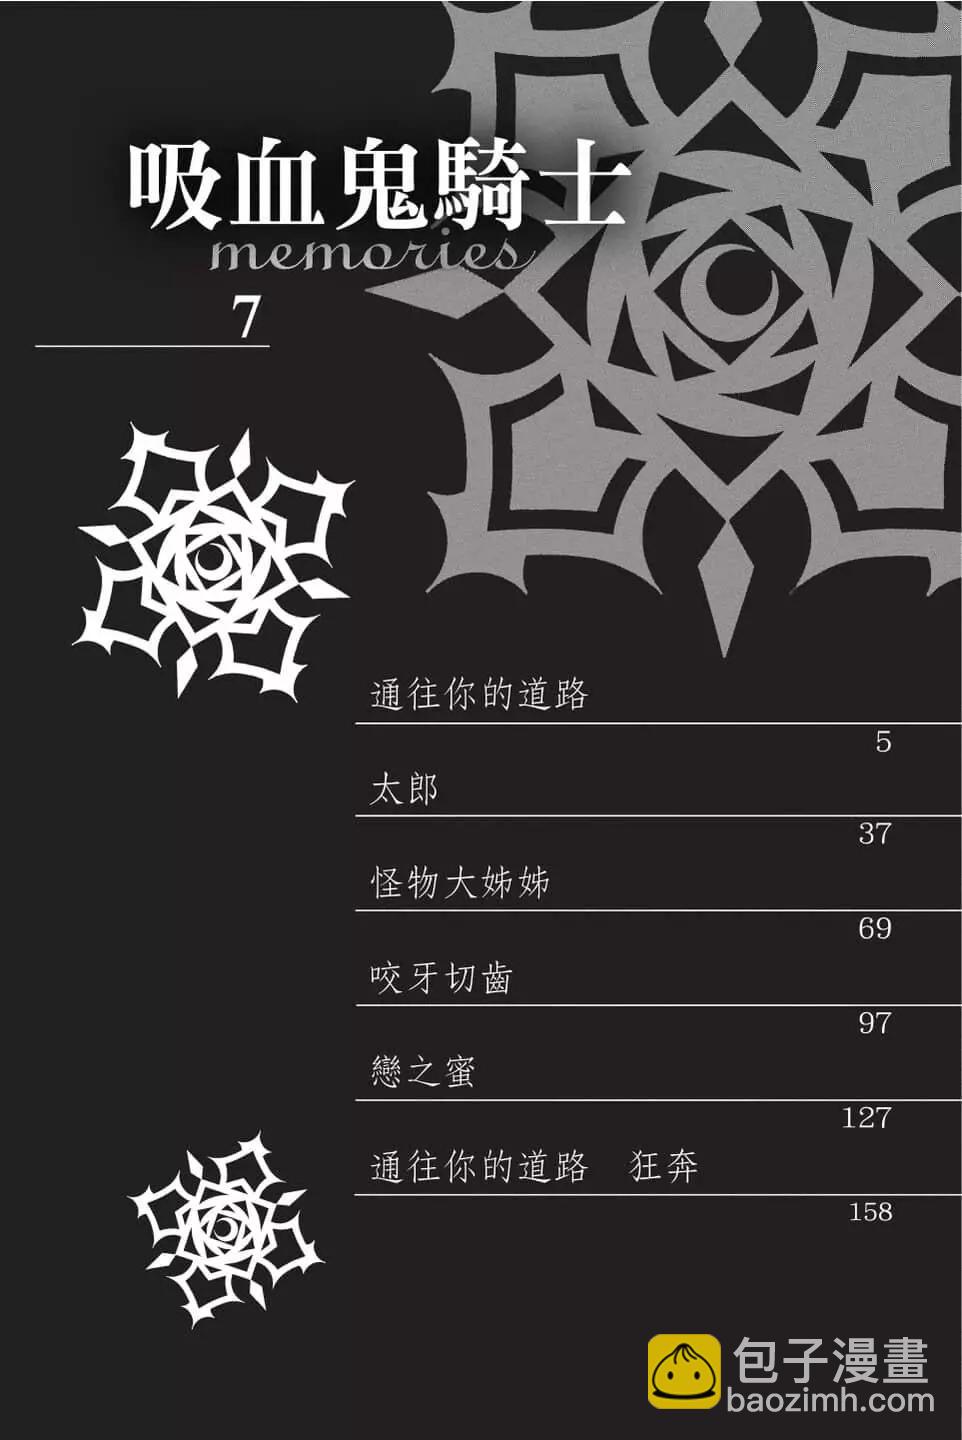 吸血鬼騎士memories - 第07卷(1/4) - 5